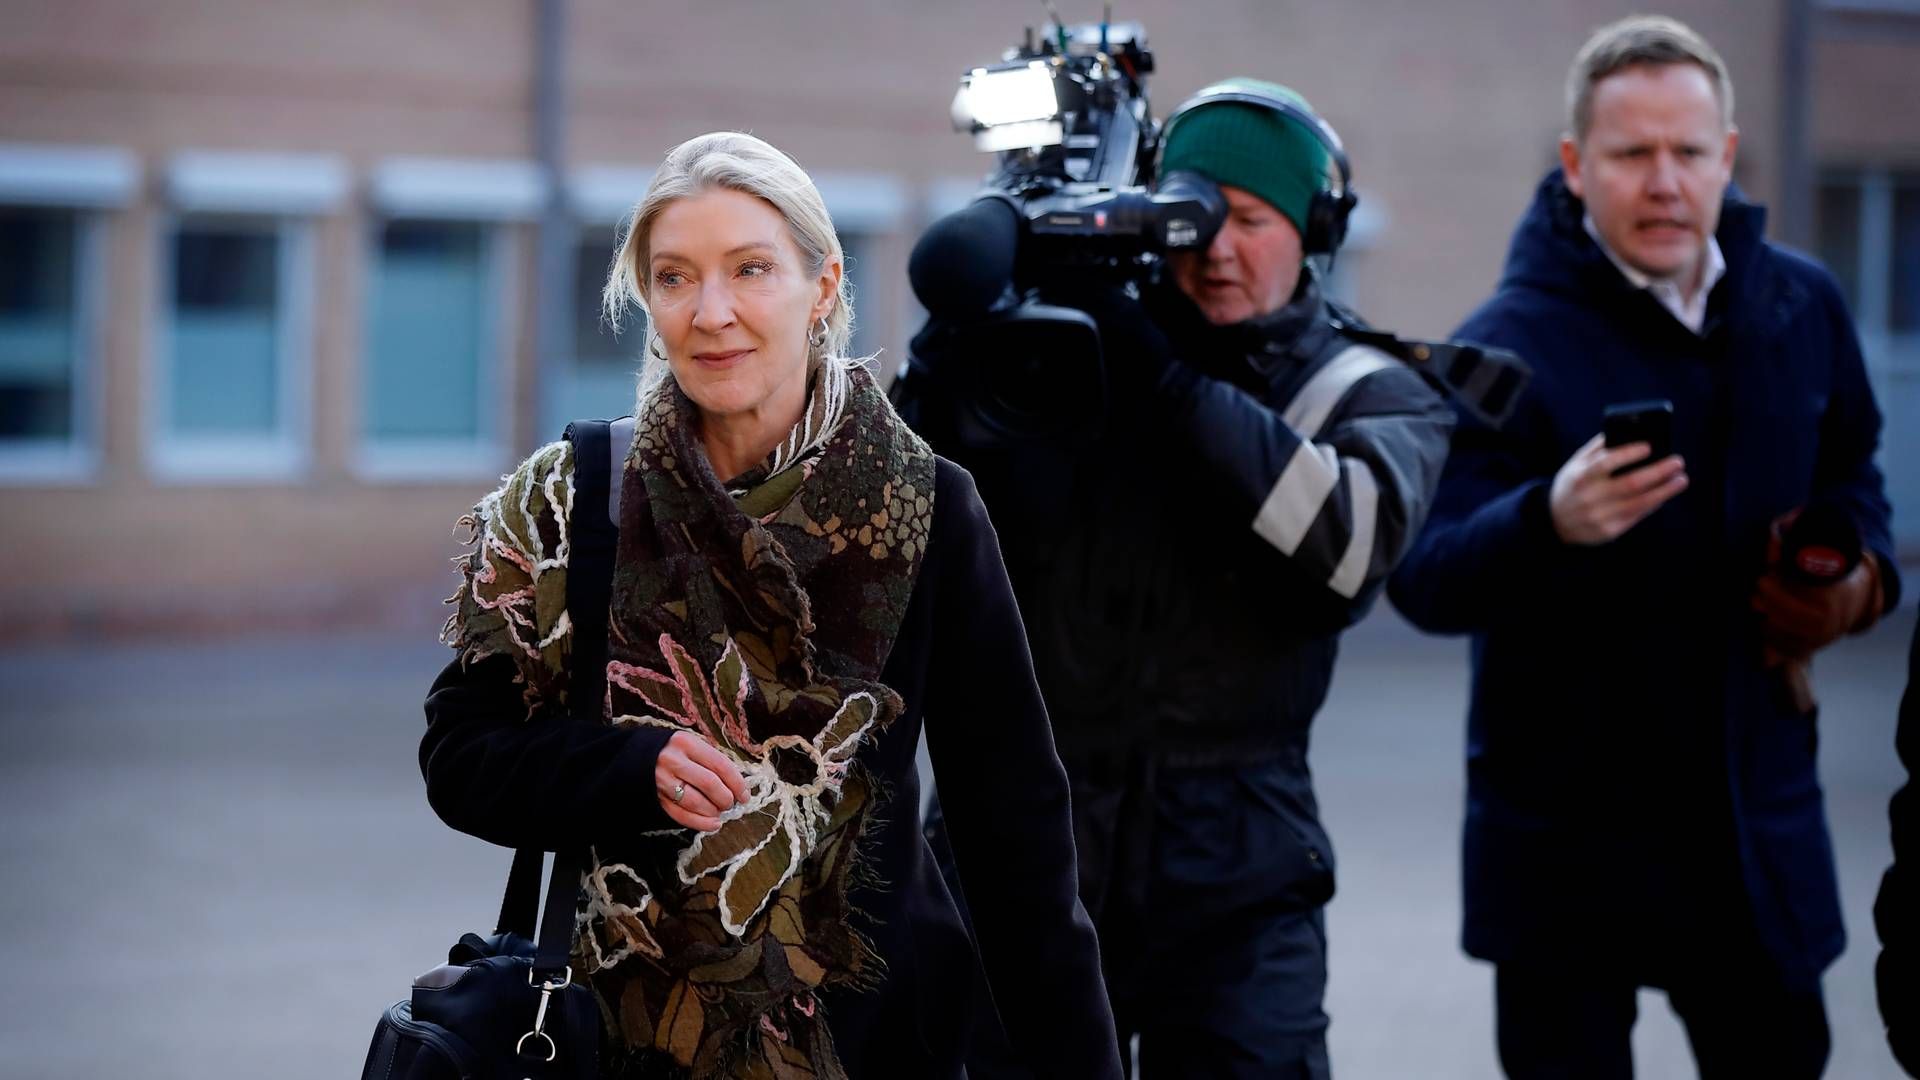 Specialanklager Marie Tullin fra Statsadvokaten for Særlig Kriminalitet (SSK) ankommer til Retten i Glostrup. | Foto: Jens Dresling